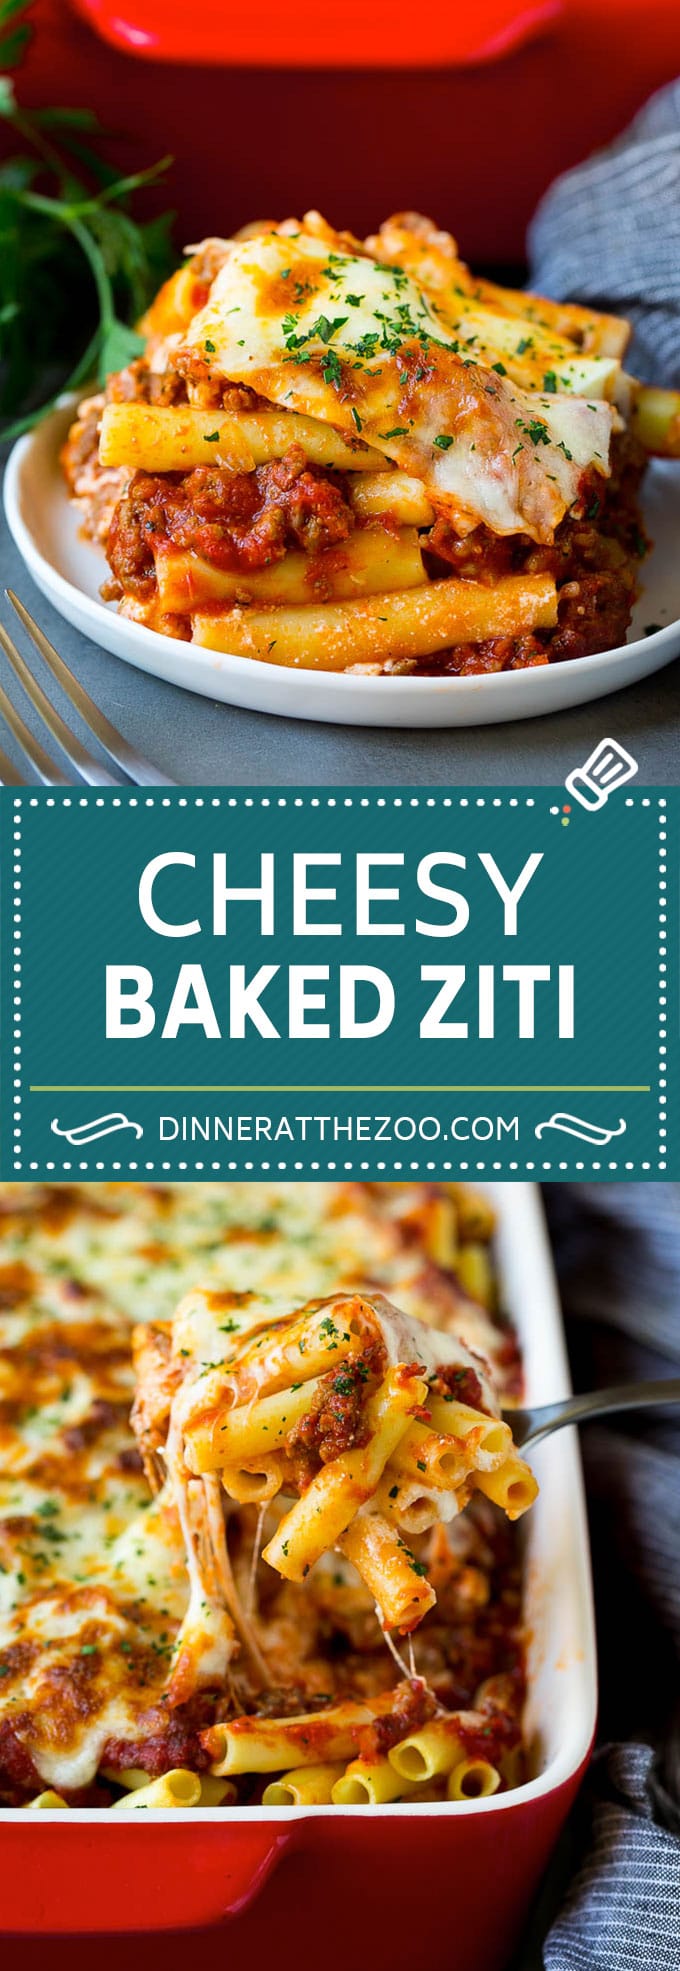 Baked Ziti Recipe | #pasta #cheese #comfortfood #sausage #dinner #dinneratthezoo